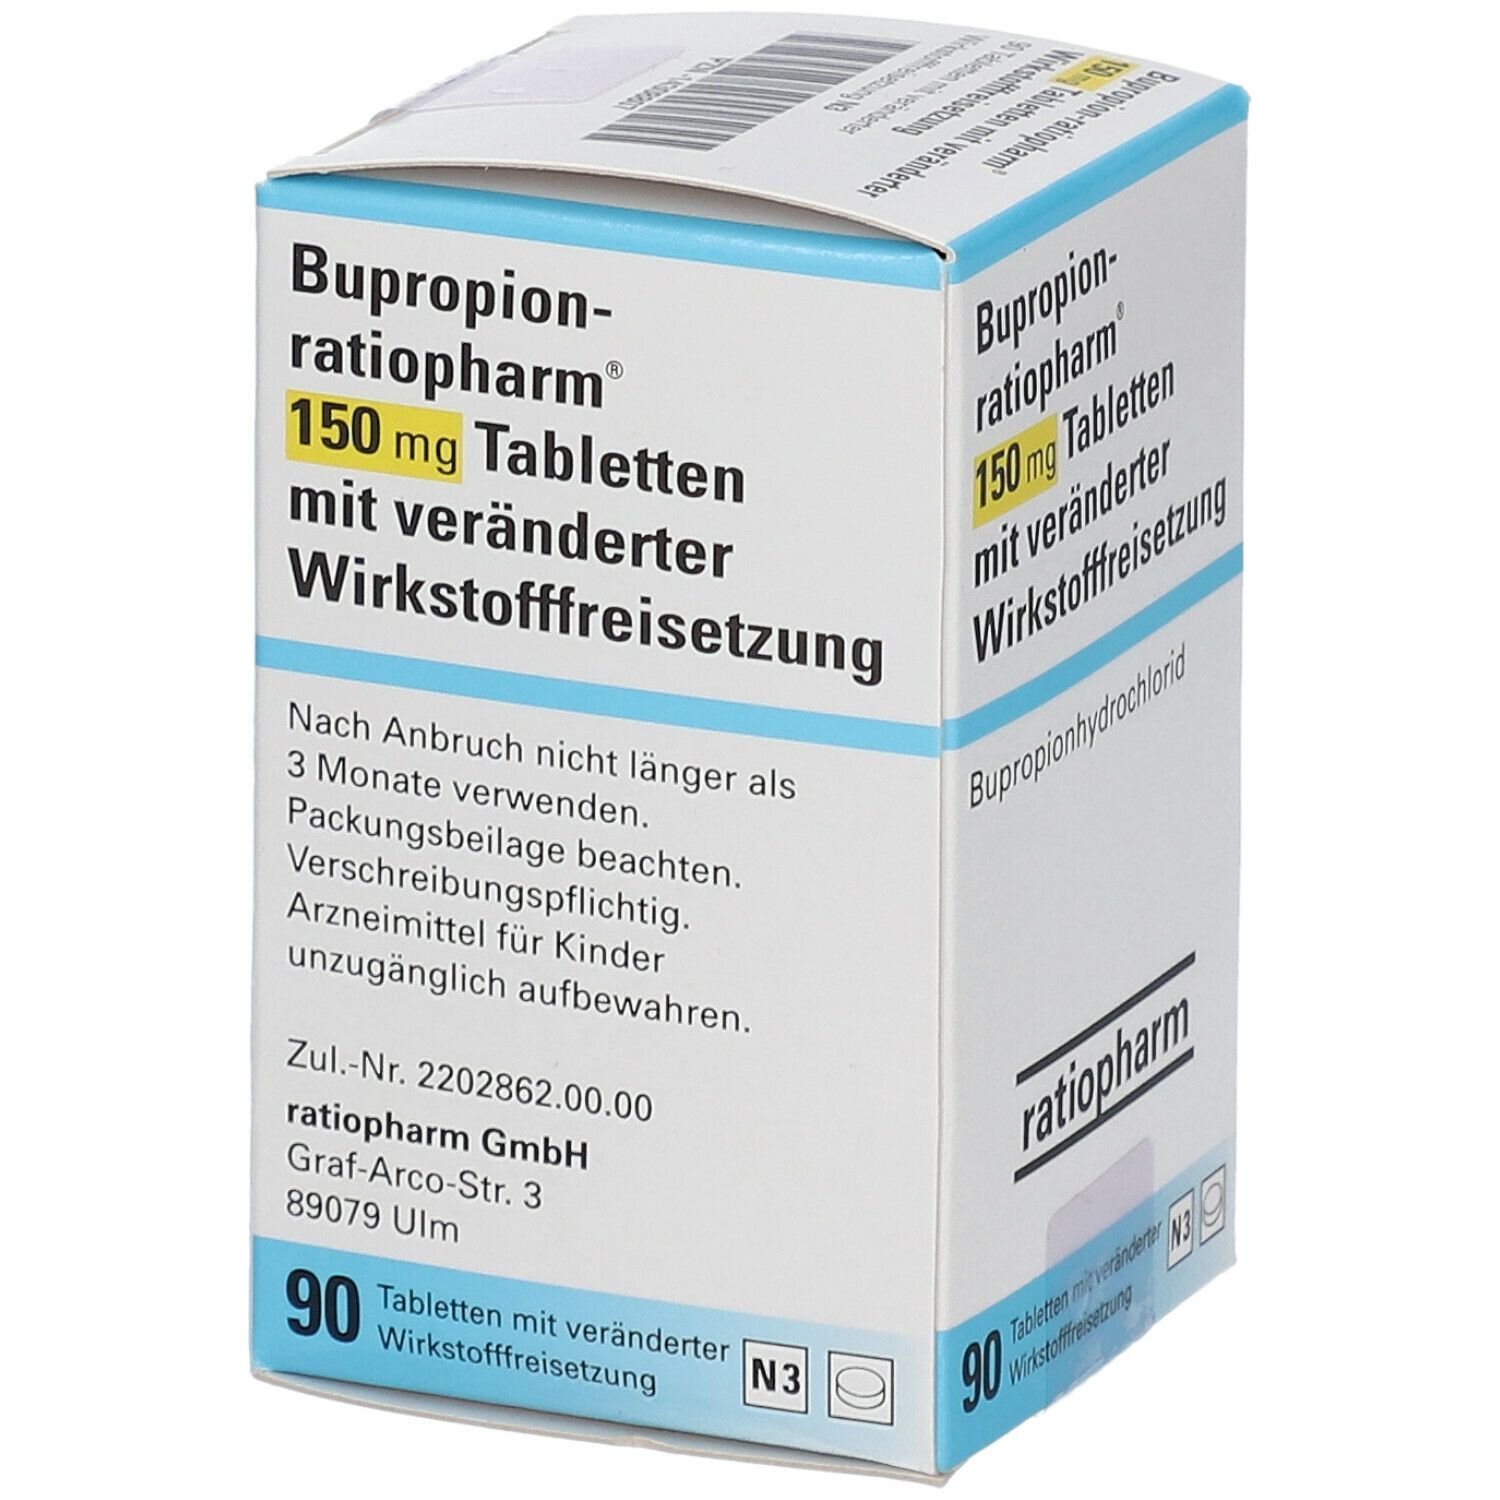 Bupropion ratiopharm® 150 mg